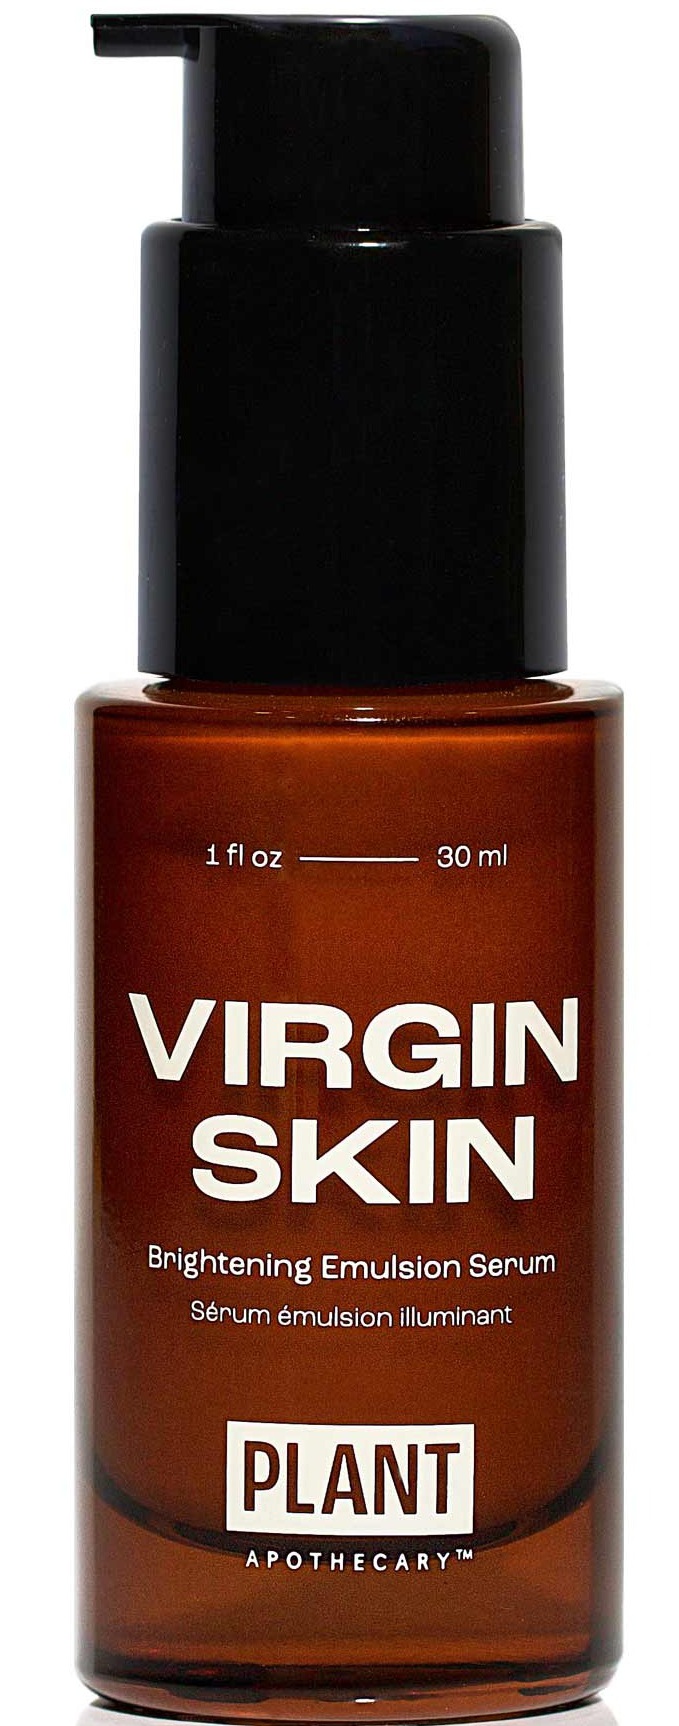 PLANT Apothecary Virgin Skin Brightening Emulsion Serum